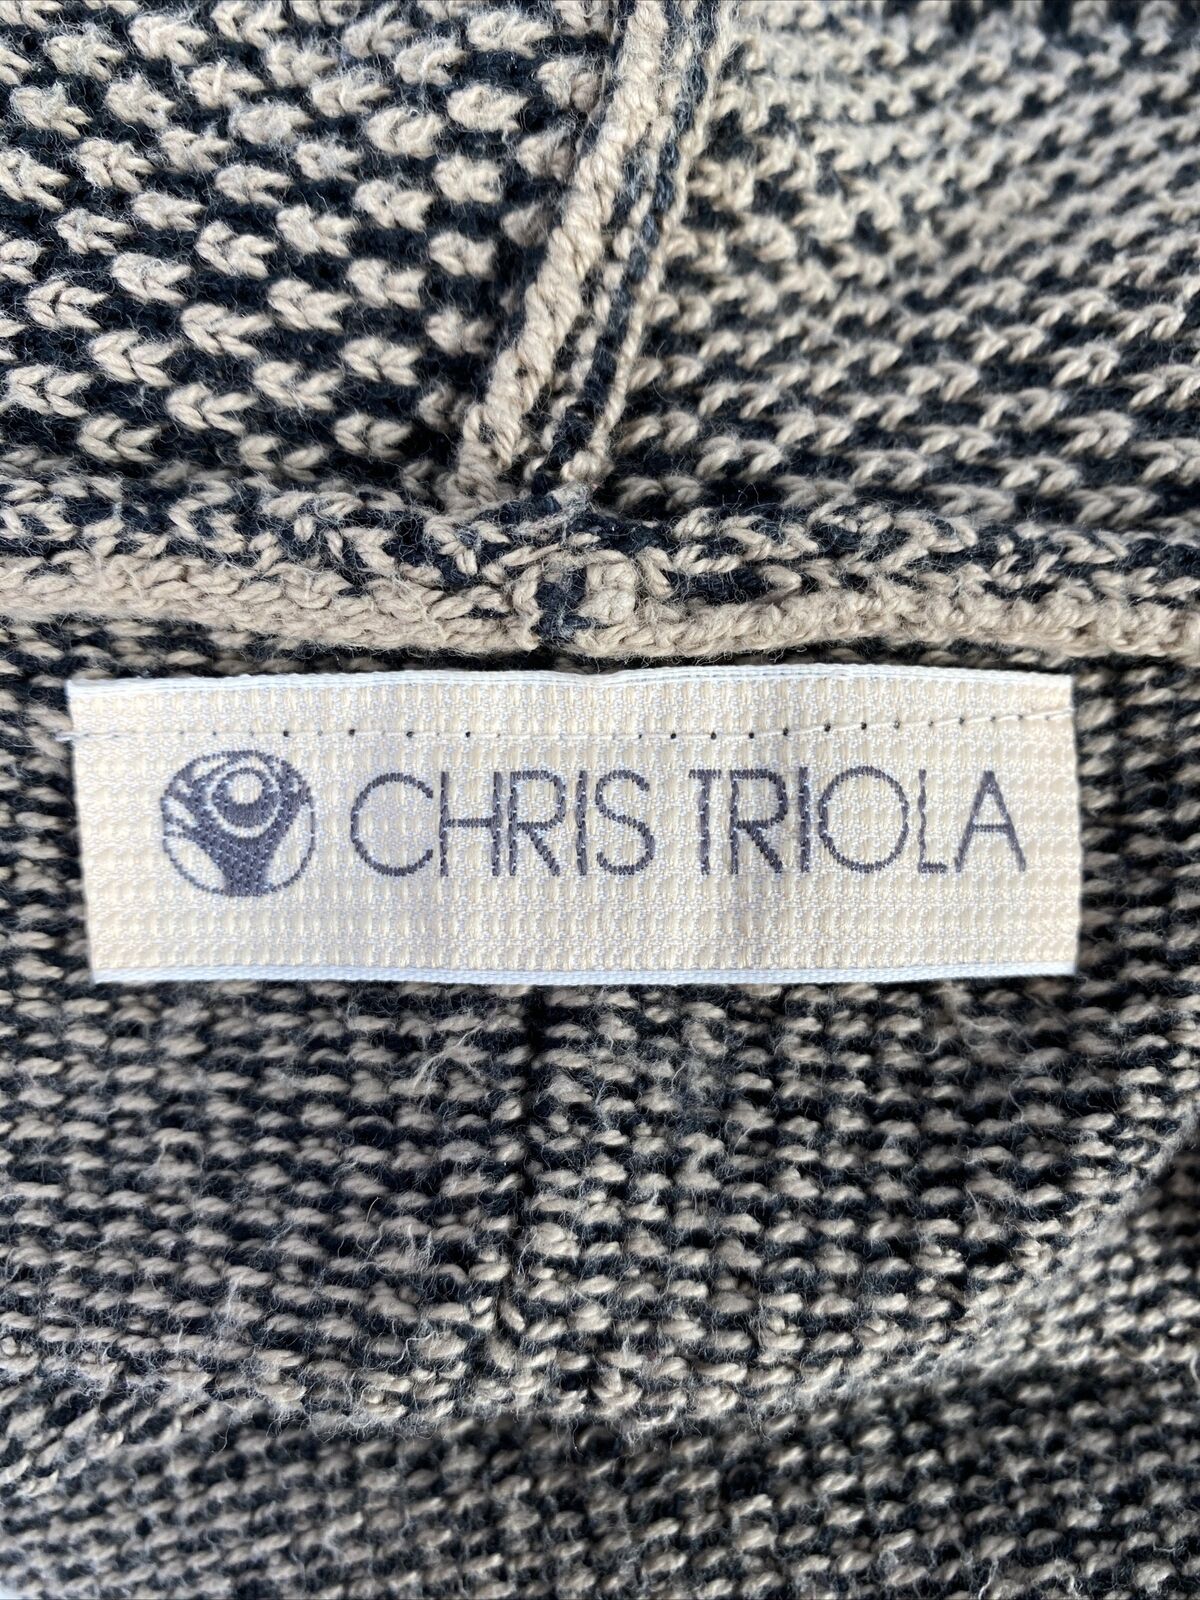 Chris Triola Women's Brown/Black Cotton Open Cardigan Sweater - M